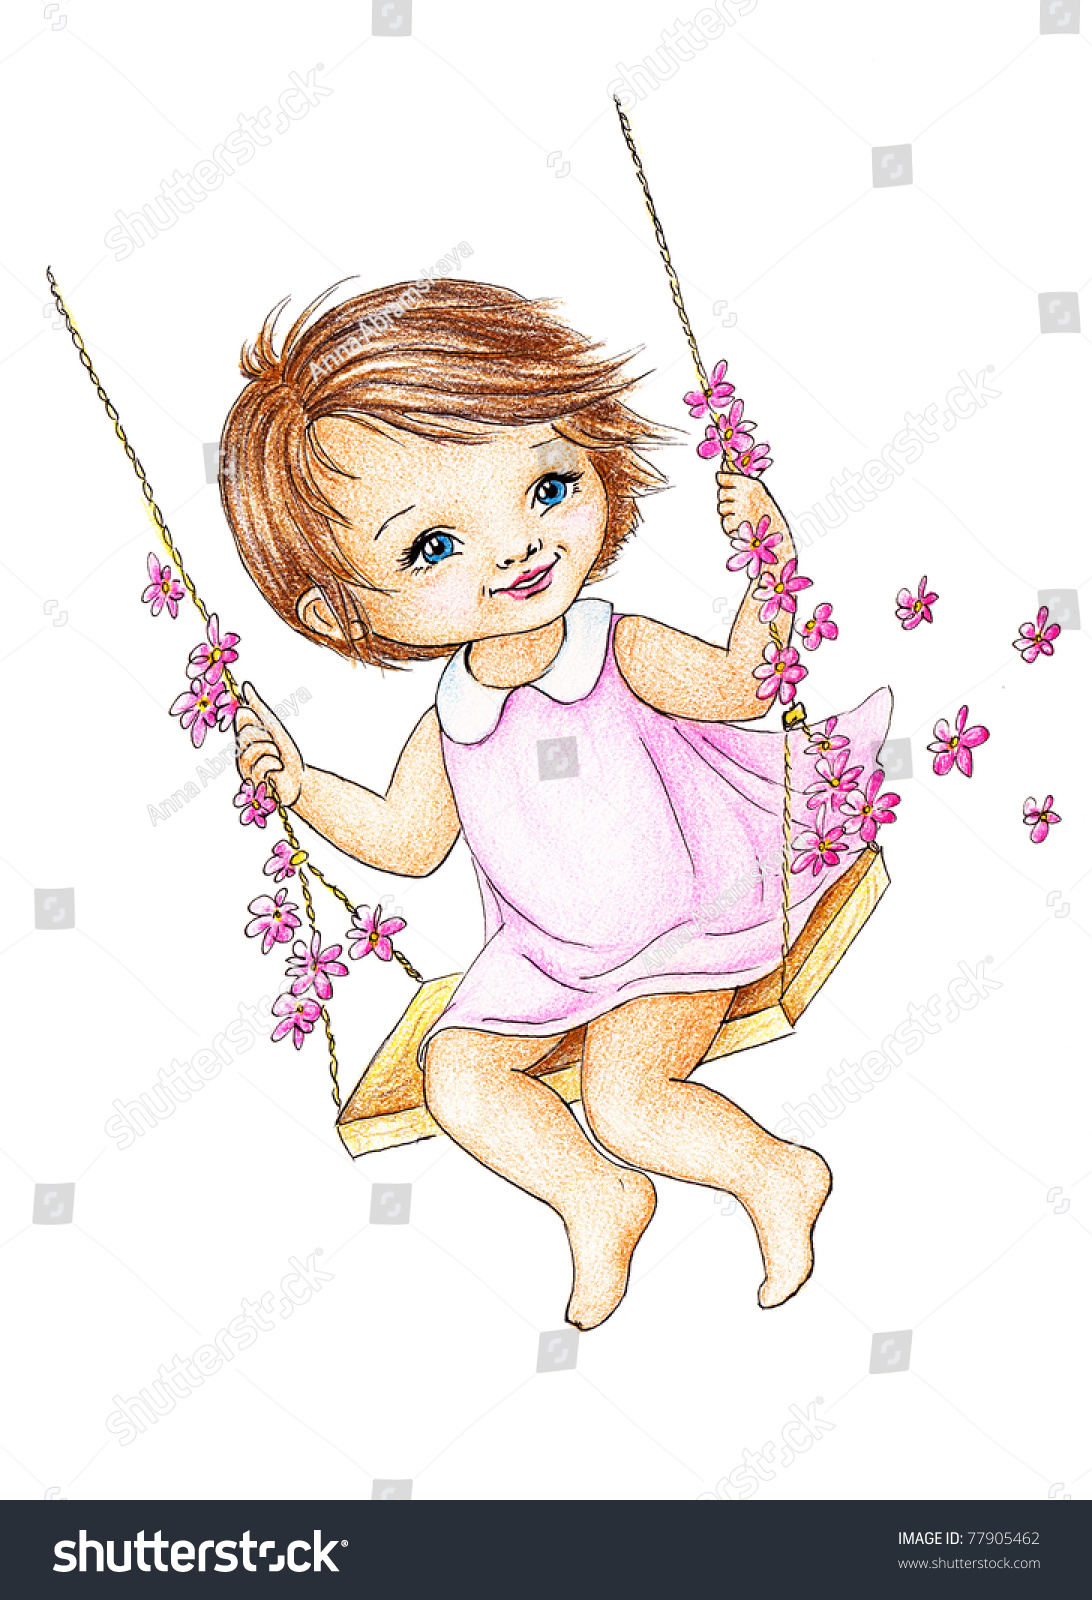 clipart girl on swing - photo #28